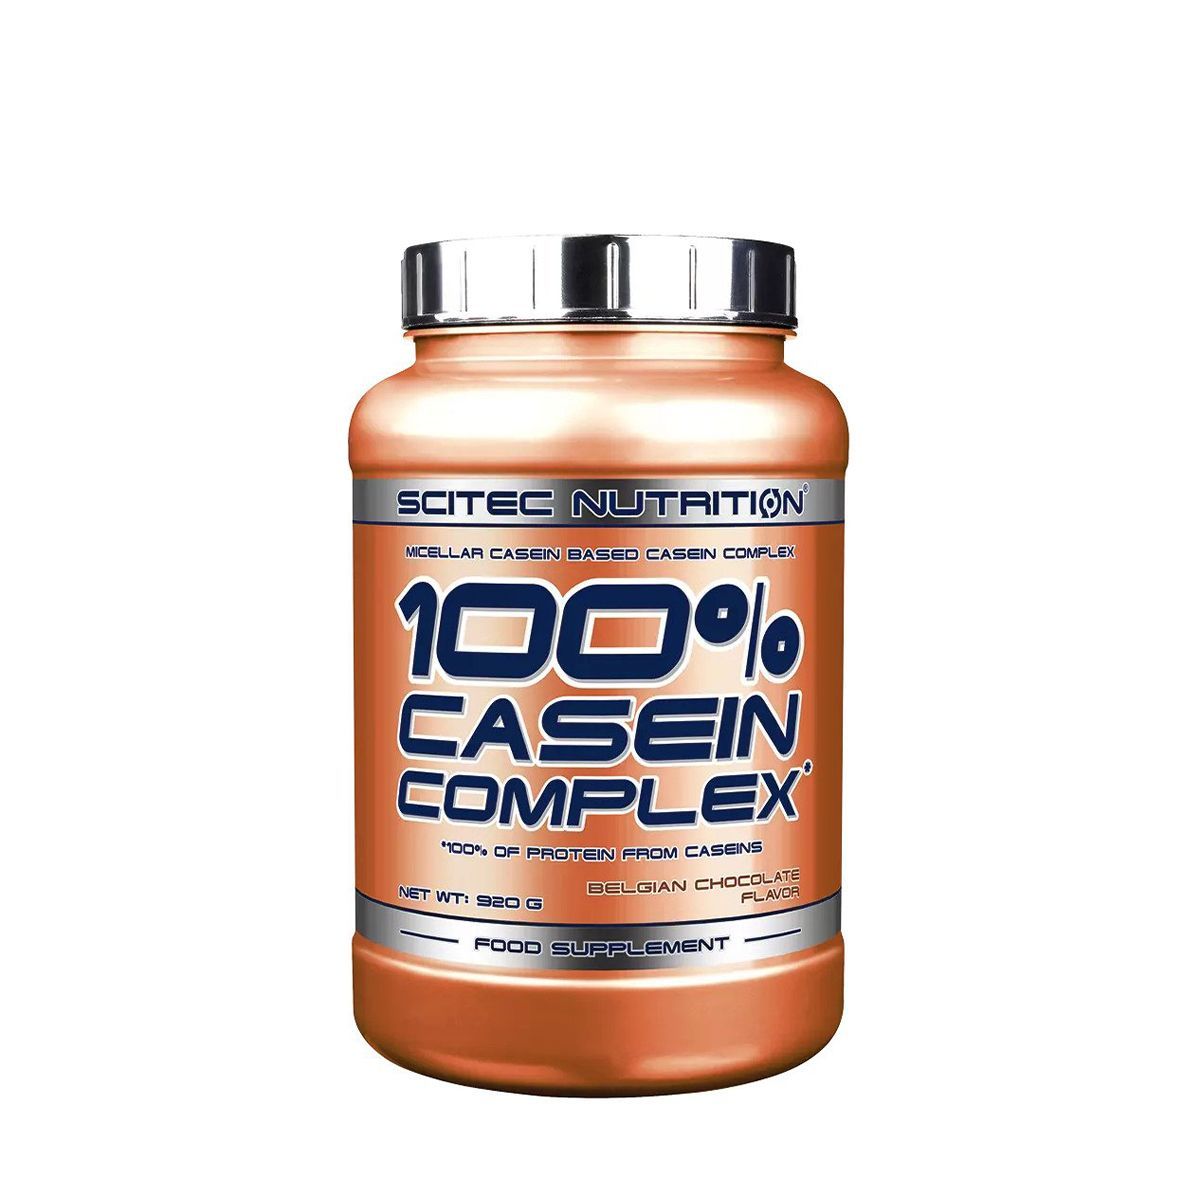 Scitec Nutrition - 100% Casein Complex - Micellar Casein Based Casein Complex - 920g (hg)